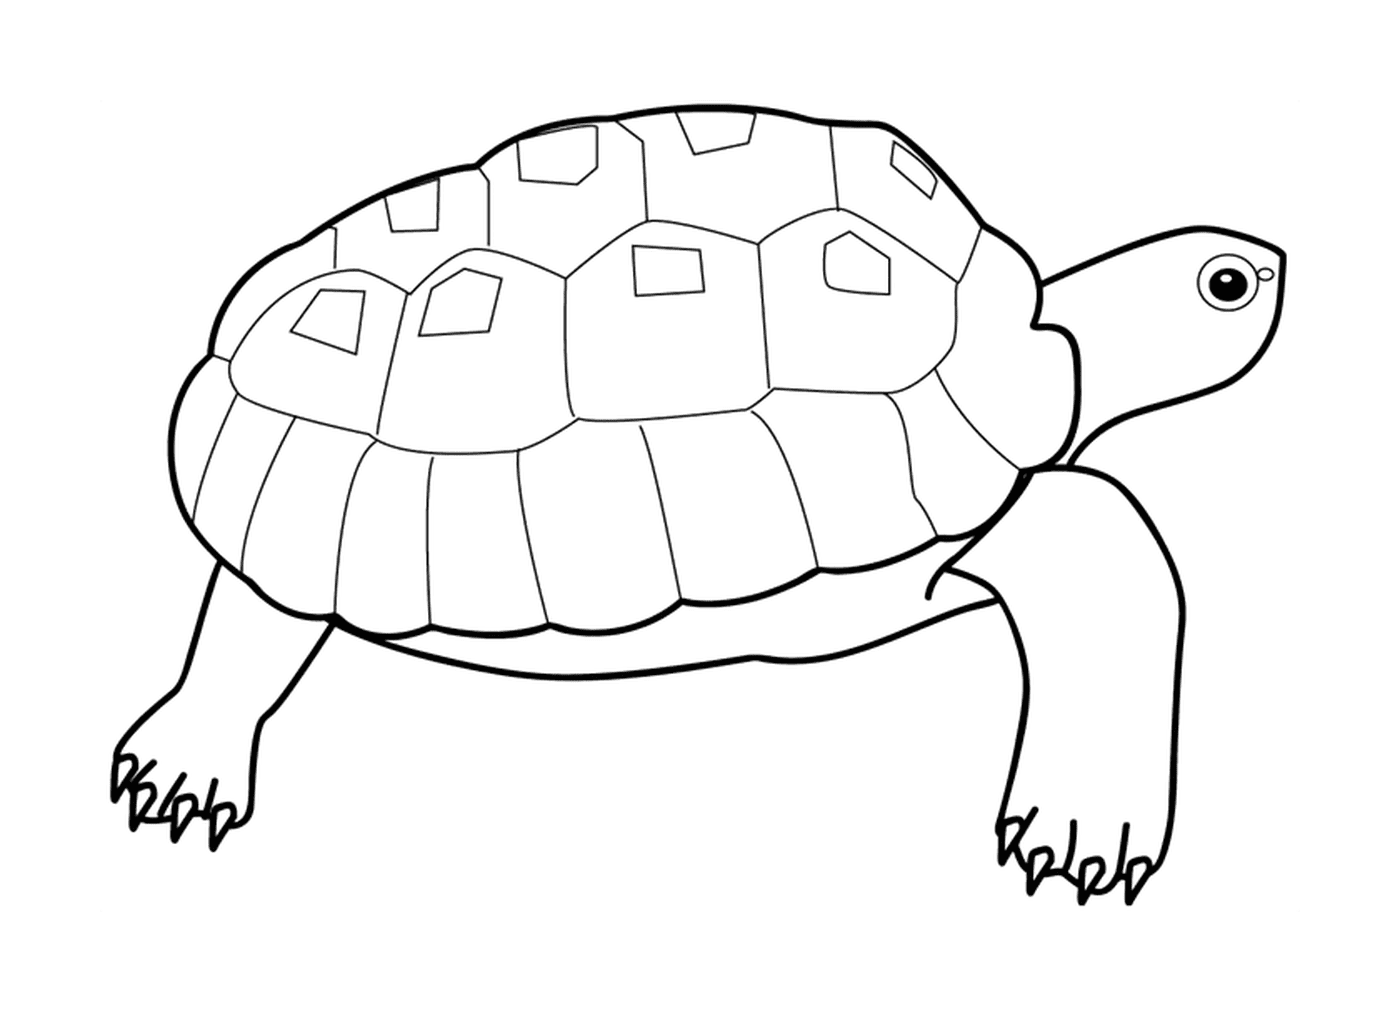  海龟 